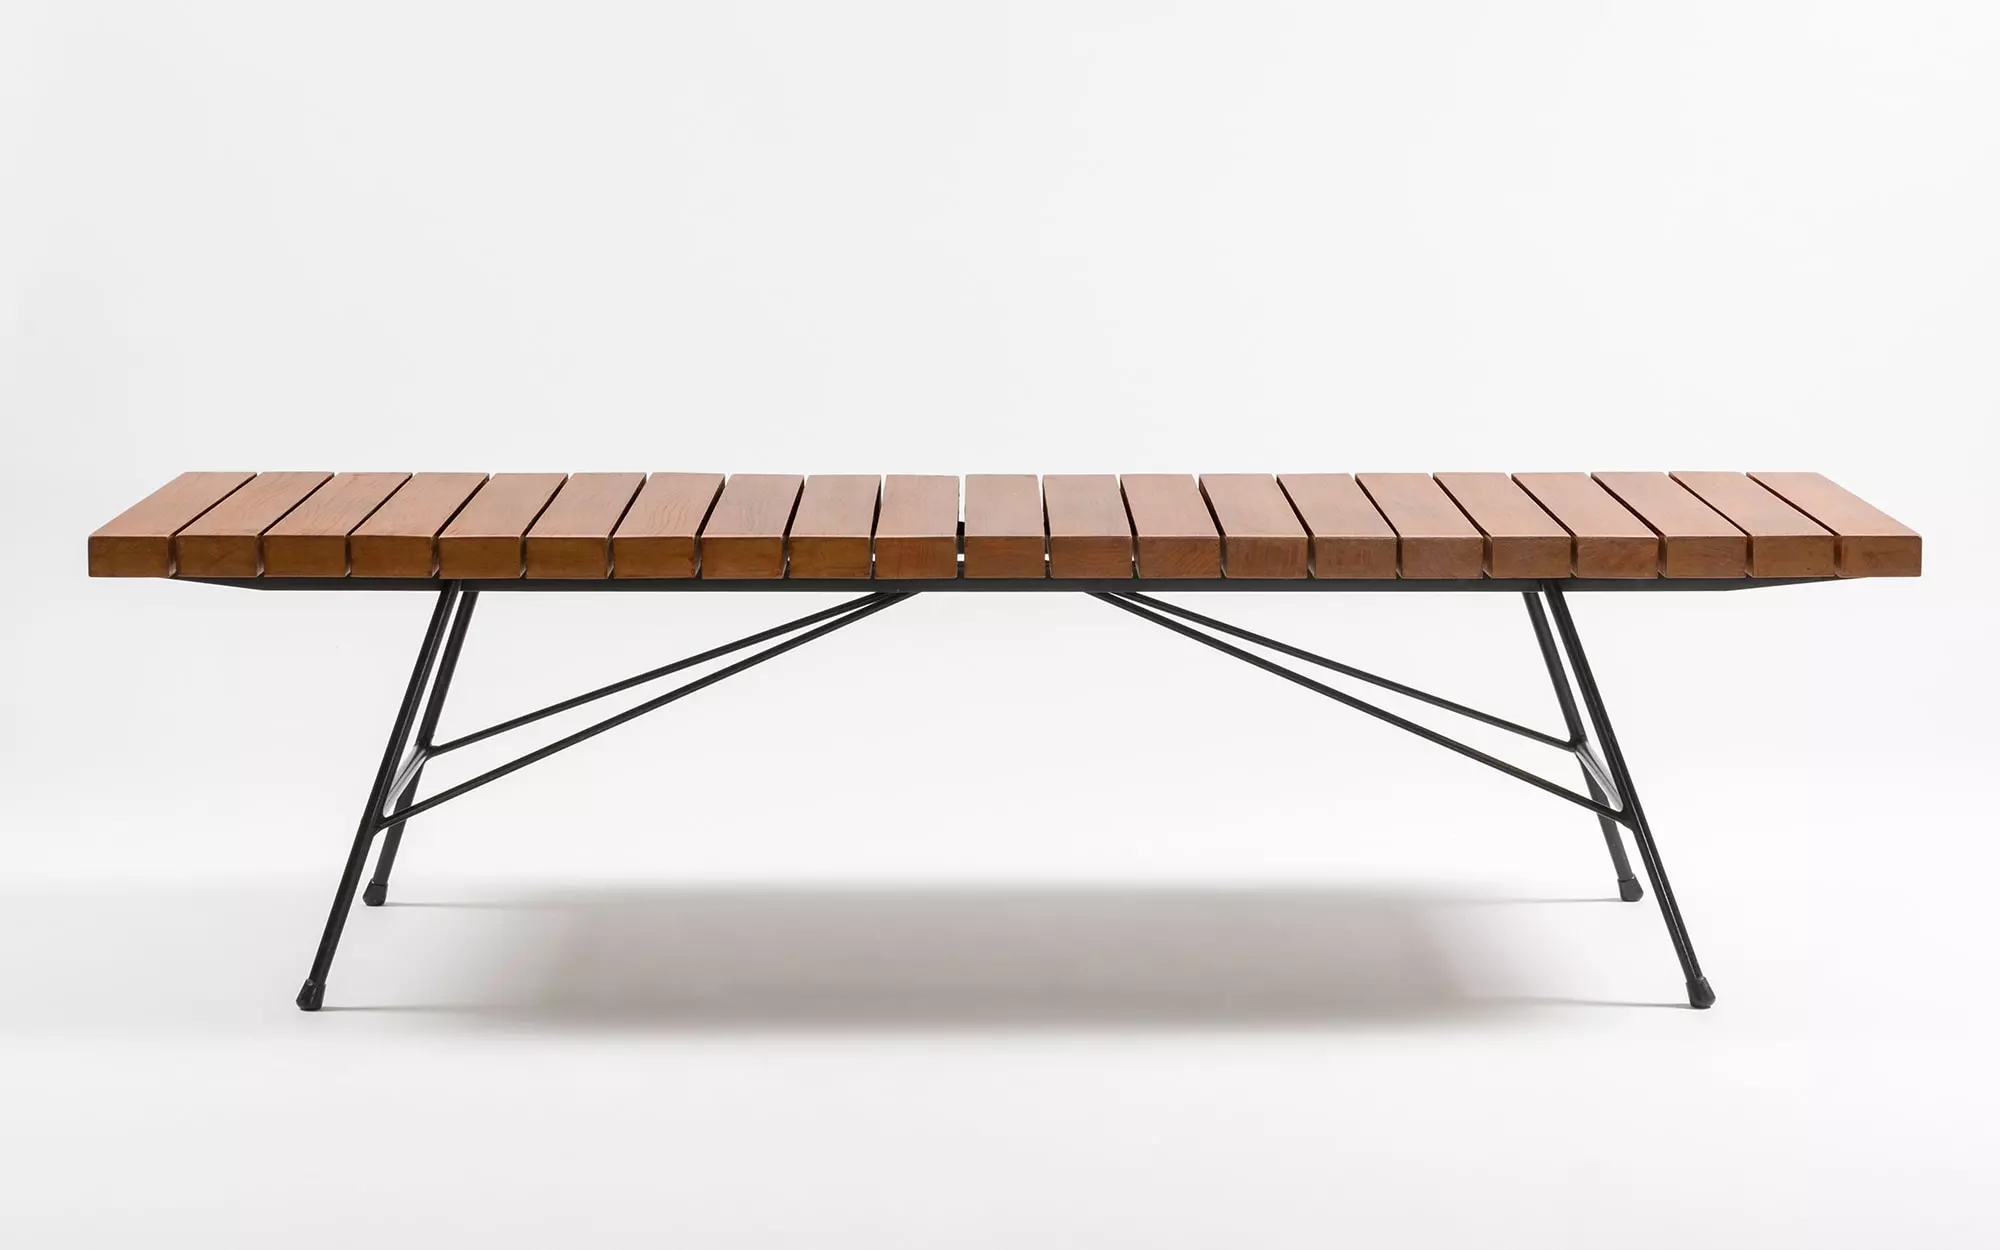 Bench - Alain Richard - Coffee table - Galerie kreo